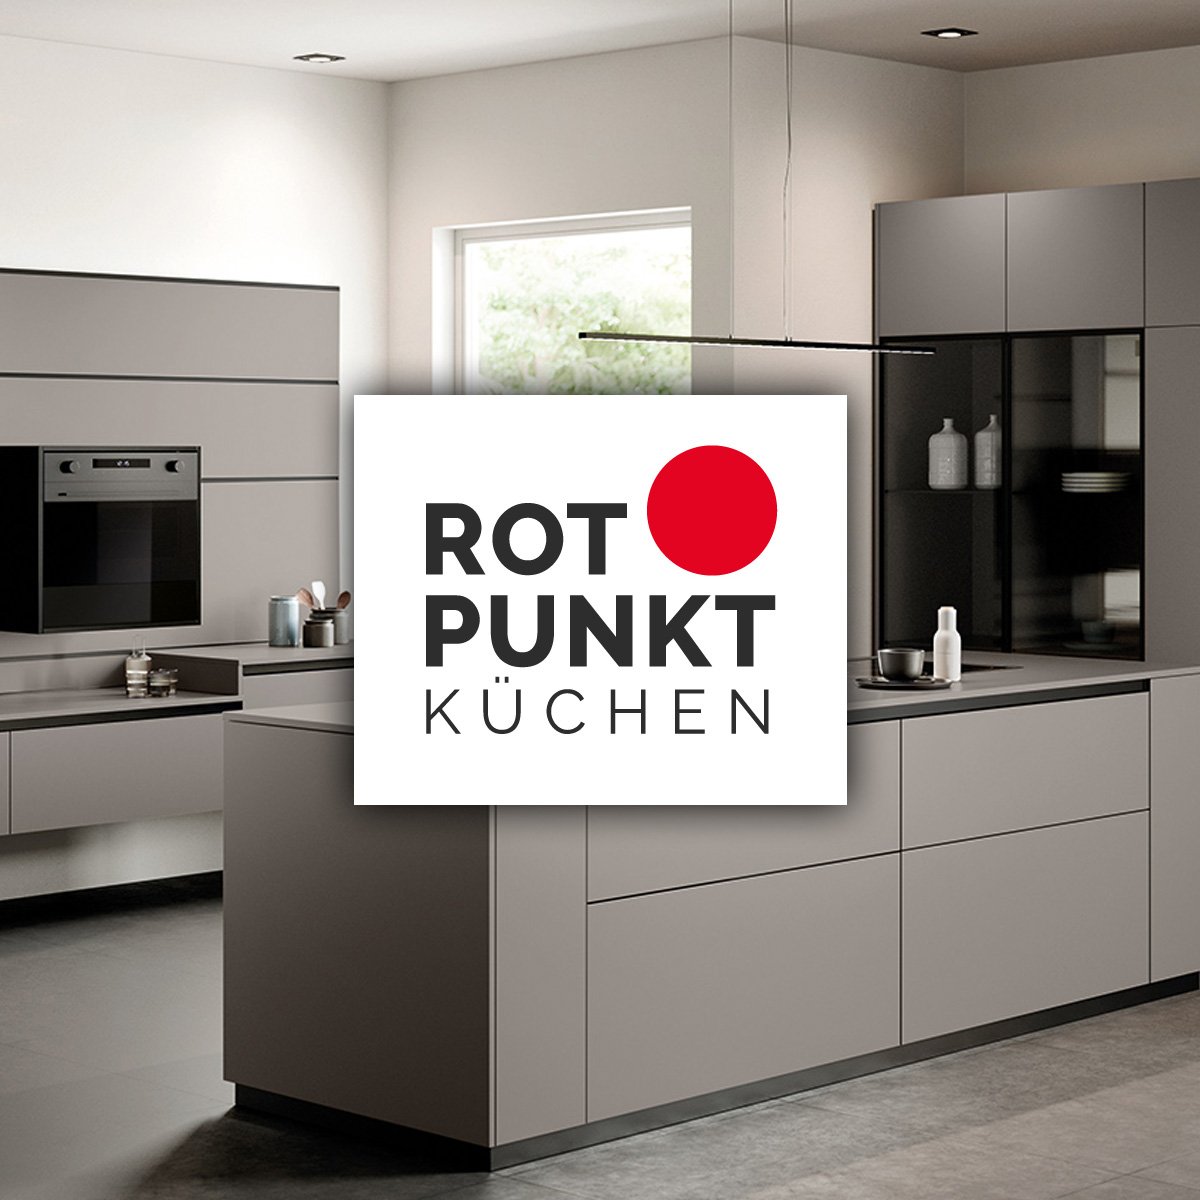 Rotpunkt German kitchens on display at Turnbull showrooms